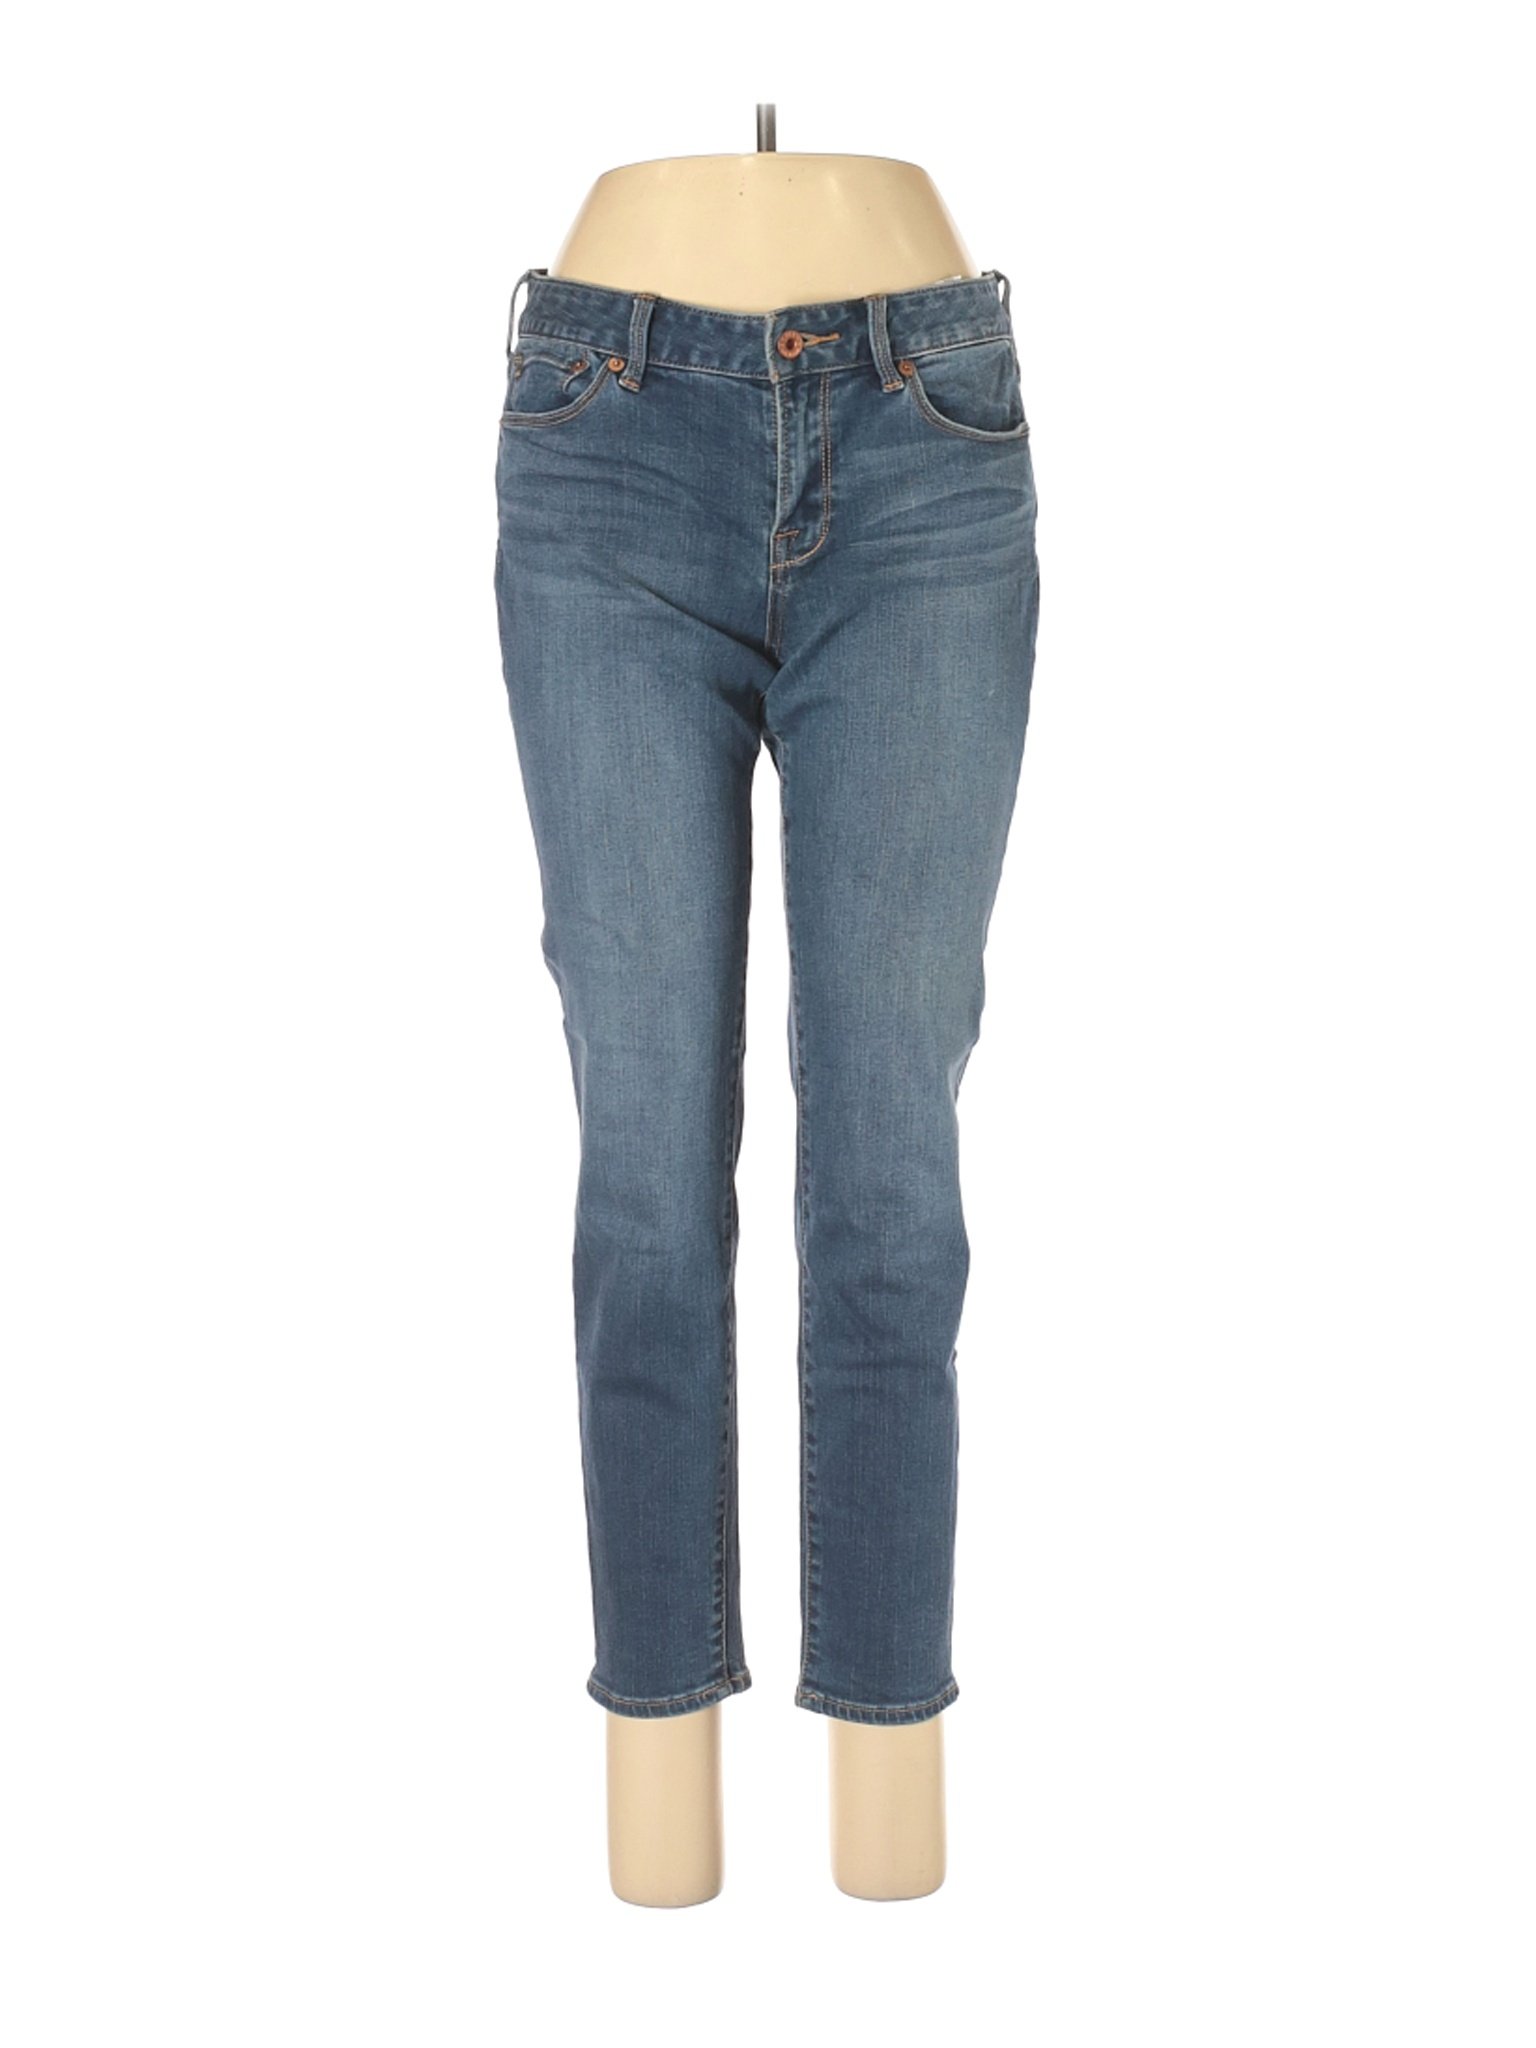 Lucky Brand Women Blue Jeans 10 | eBay